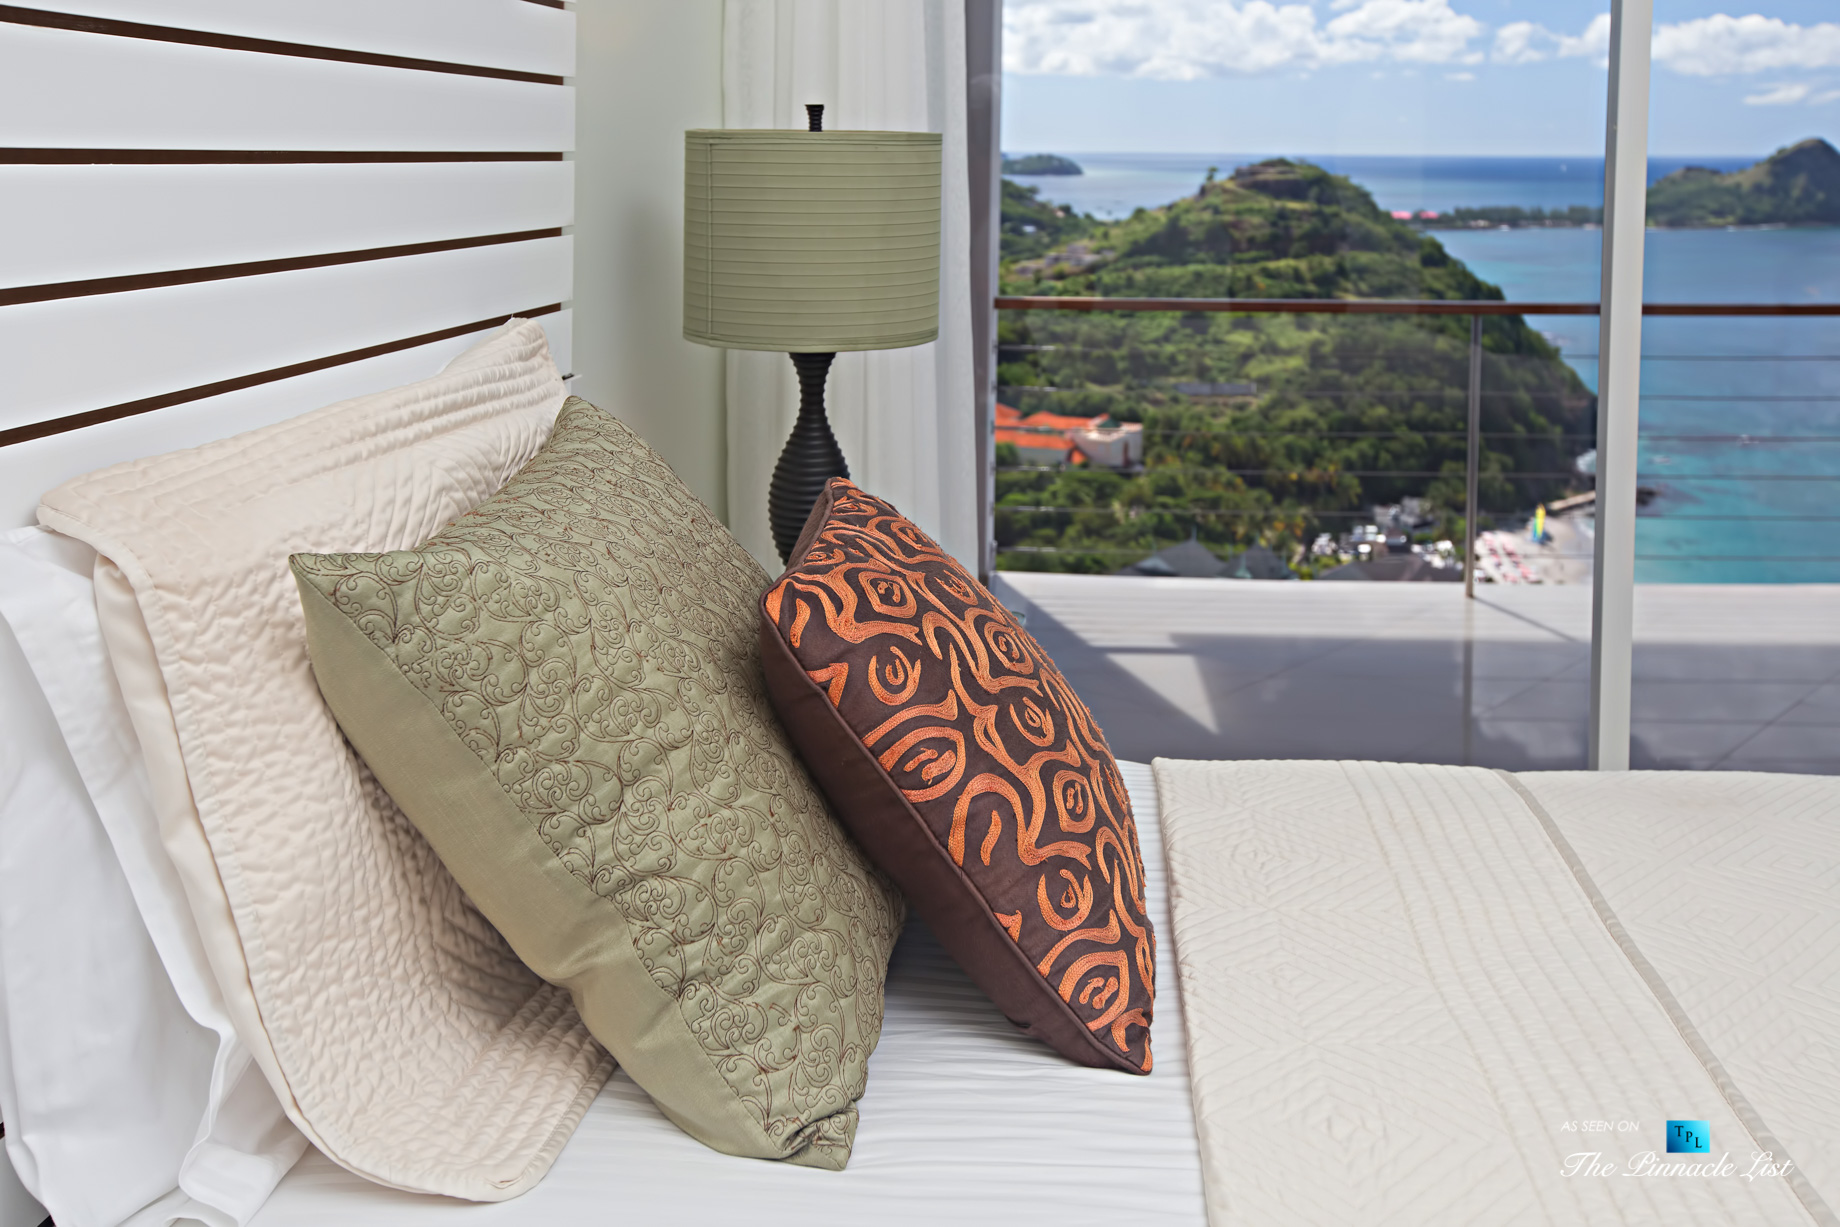 Akasha Luxury Caribbean Villa - Cap Estate, St. Lucia - Bedroom with Ocean View - Luxury Real Estate - Premier Oceanview Home